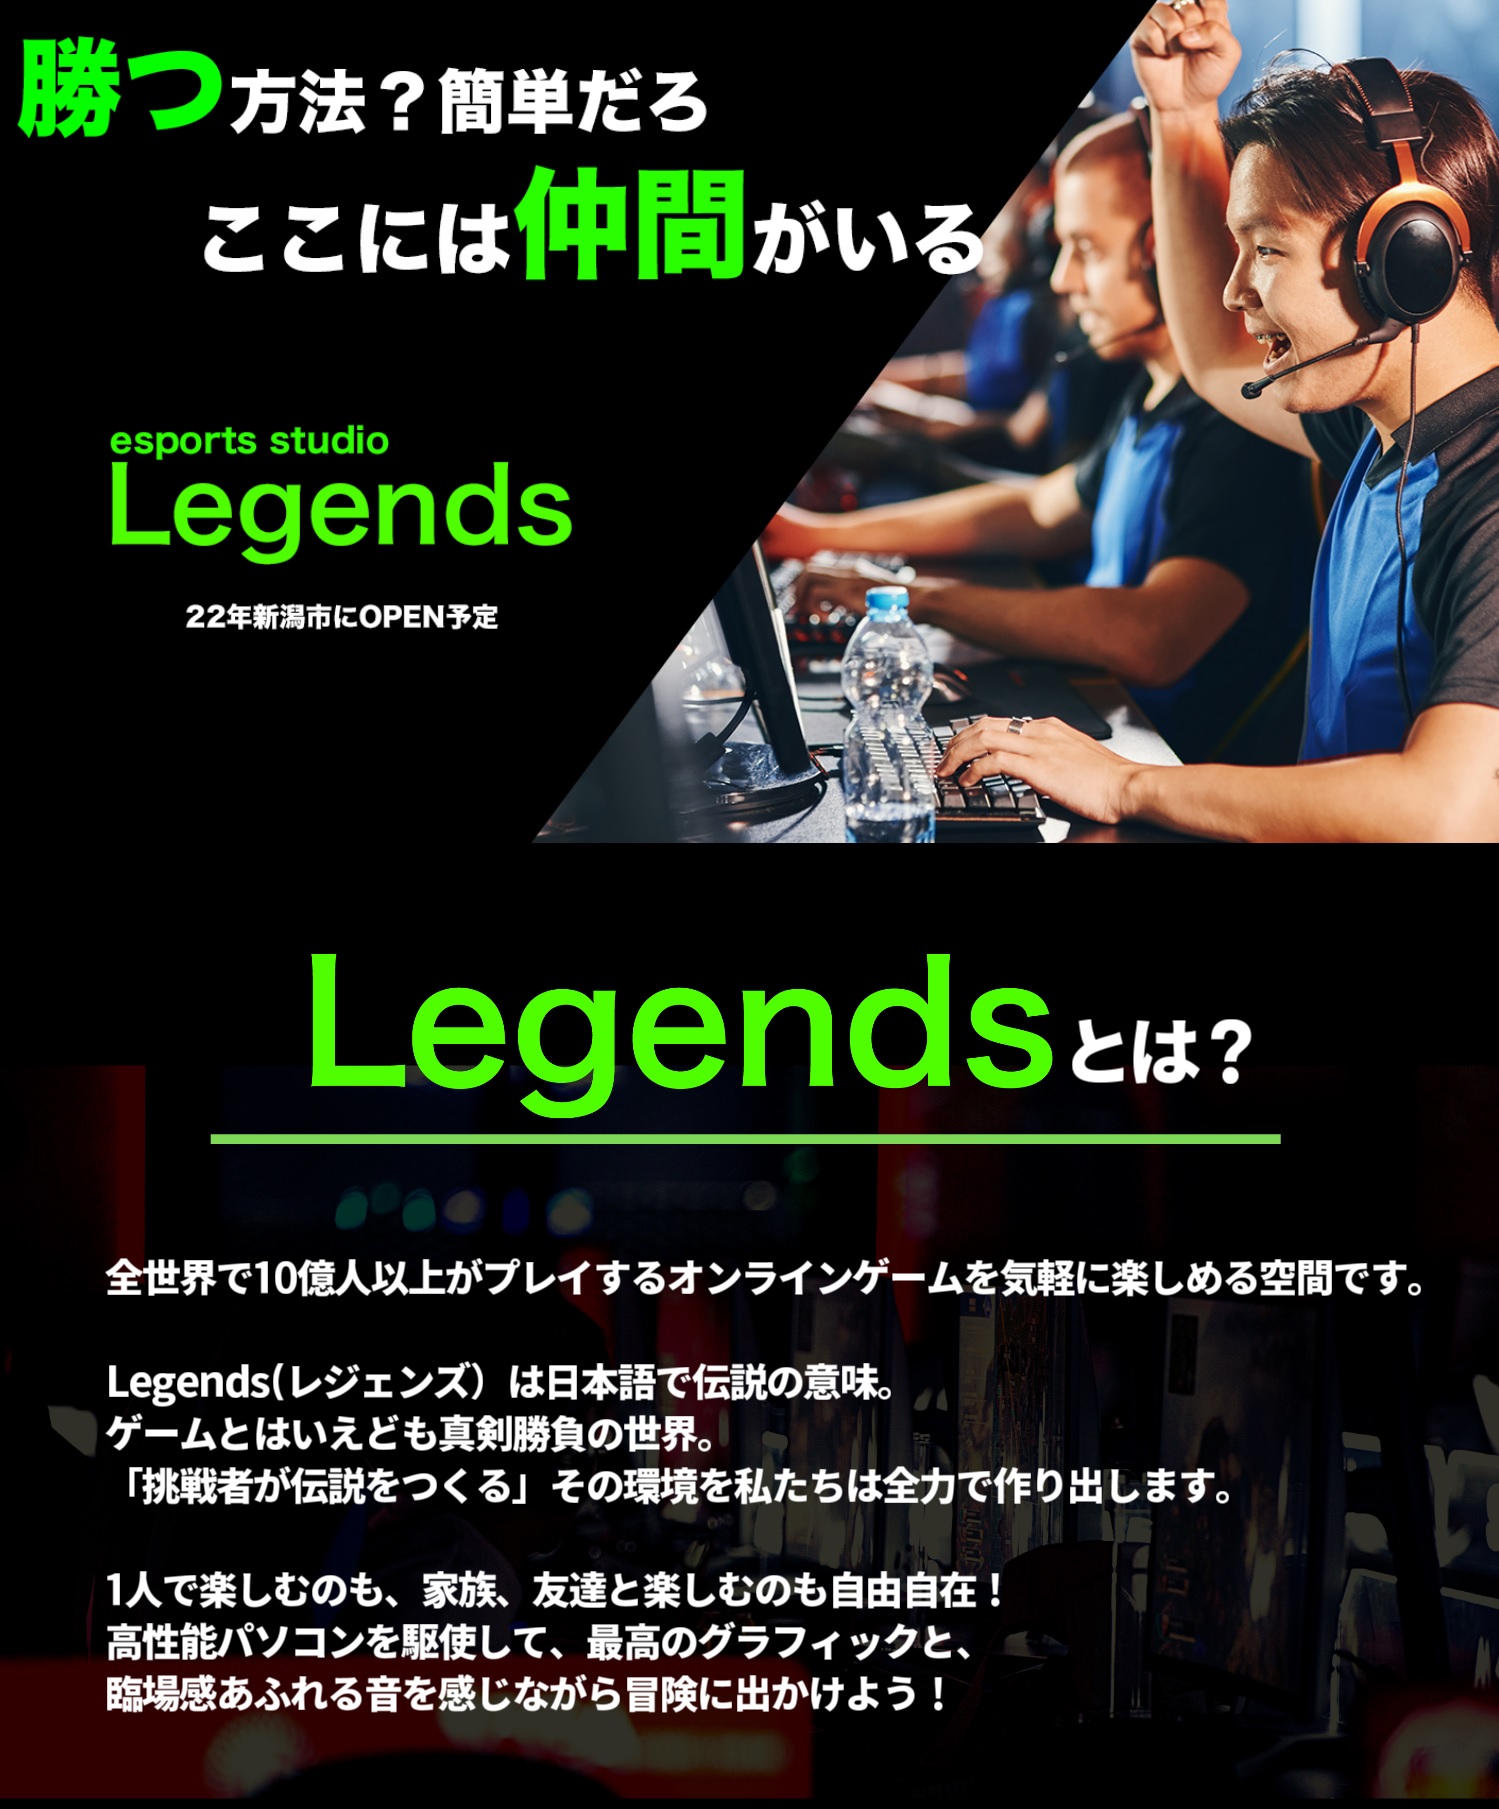 Legendsとは全世界で10億人以上がプレイするオンラインゲームを気軽に楽しめる空間です。Legends
（レジェンズ）は日本語で伝説の意味。ゲームとはいえども真剣勝負の世界。
「挑戦者が伝説をつくる」その環境を私たちは全力で作り出します。
1人で楽しむのも、家族、友達と楽しむのも自由自在！
高性能パソコンを駆使して、最高のグラフィックと、臨場感あふれる音を感じながら冒険に出かけよう！